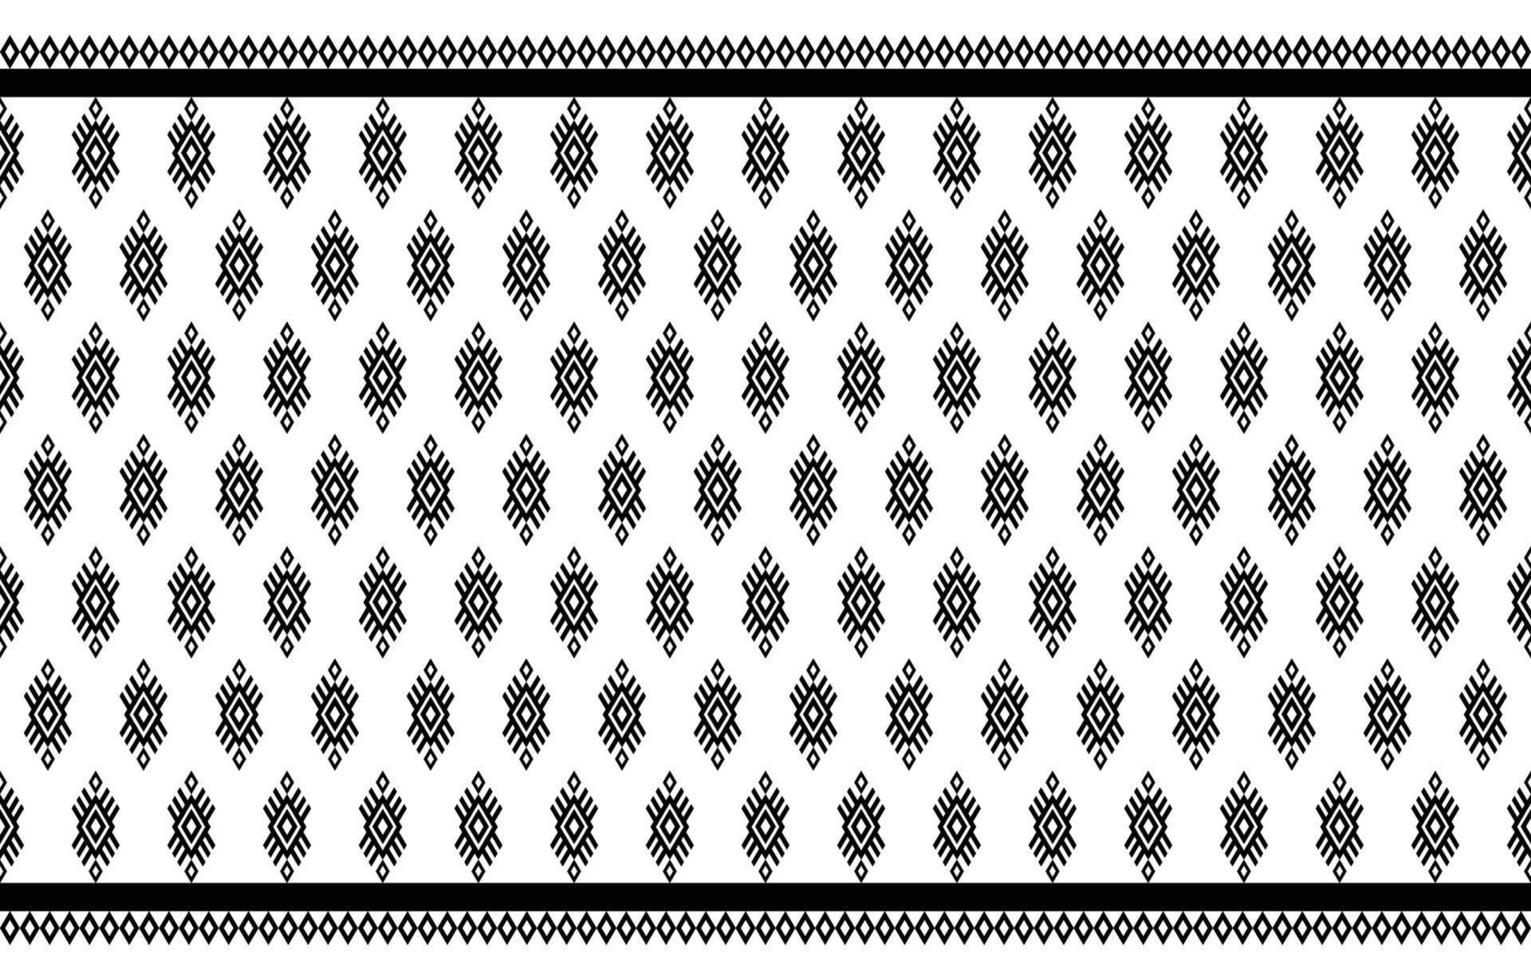 geometrisk etnisk mönster sömlös grafisk. stil etnisk sömlös färgrik textil. design för bakgrund, tapeter, tyg, matta, ornament, dekoration, kläder, batik, inslagning, vektor illustration